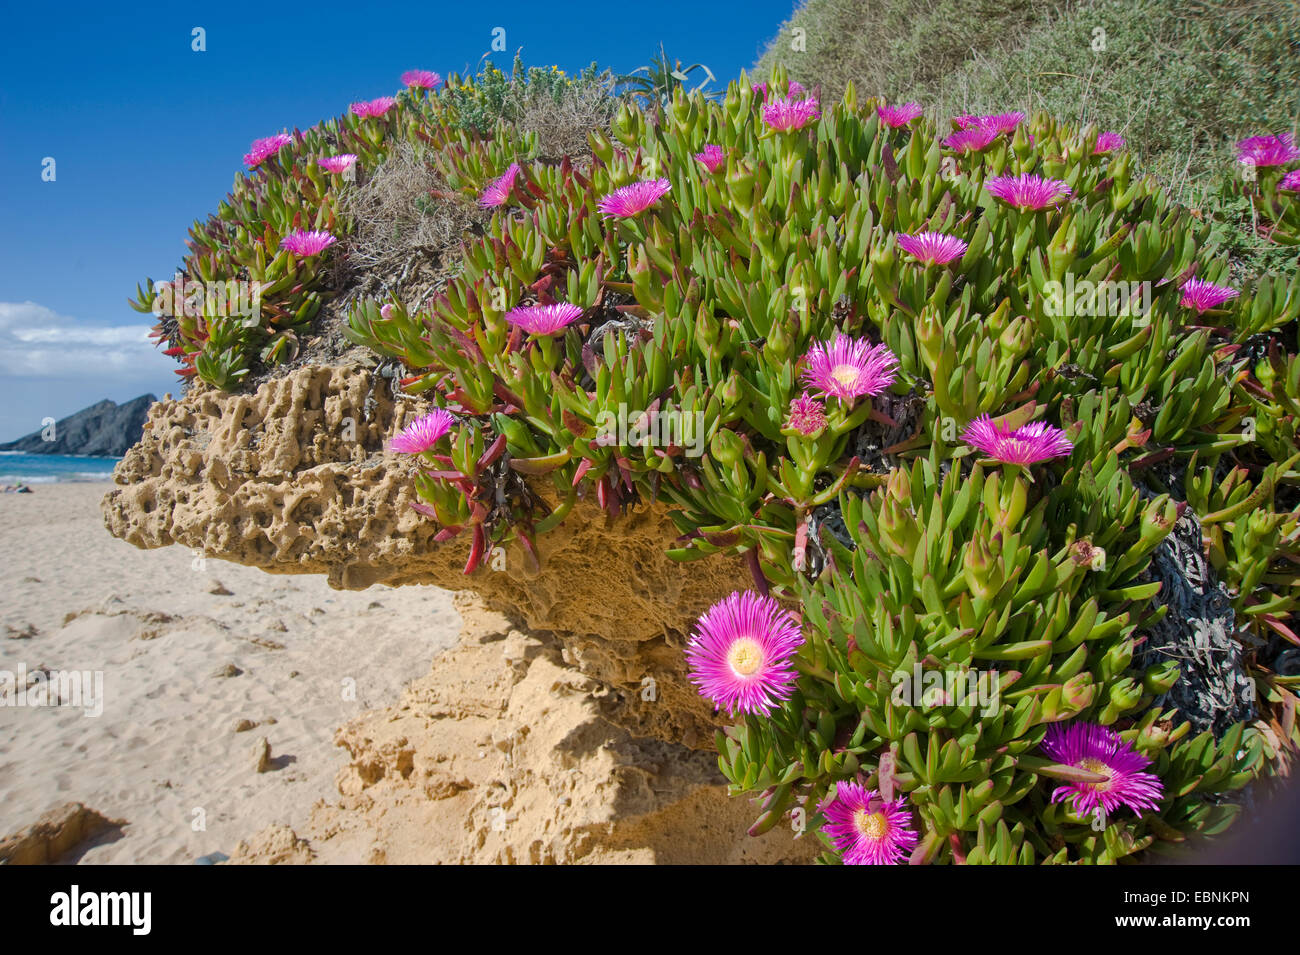 freeway iceplant, Hottentot fig (Carpobrotus edulis), blooming on a sandy beach in the Mediterranean Area Stock Photo